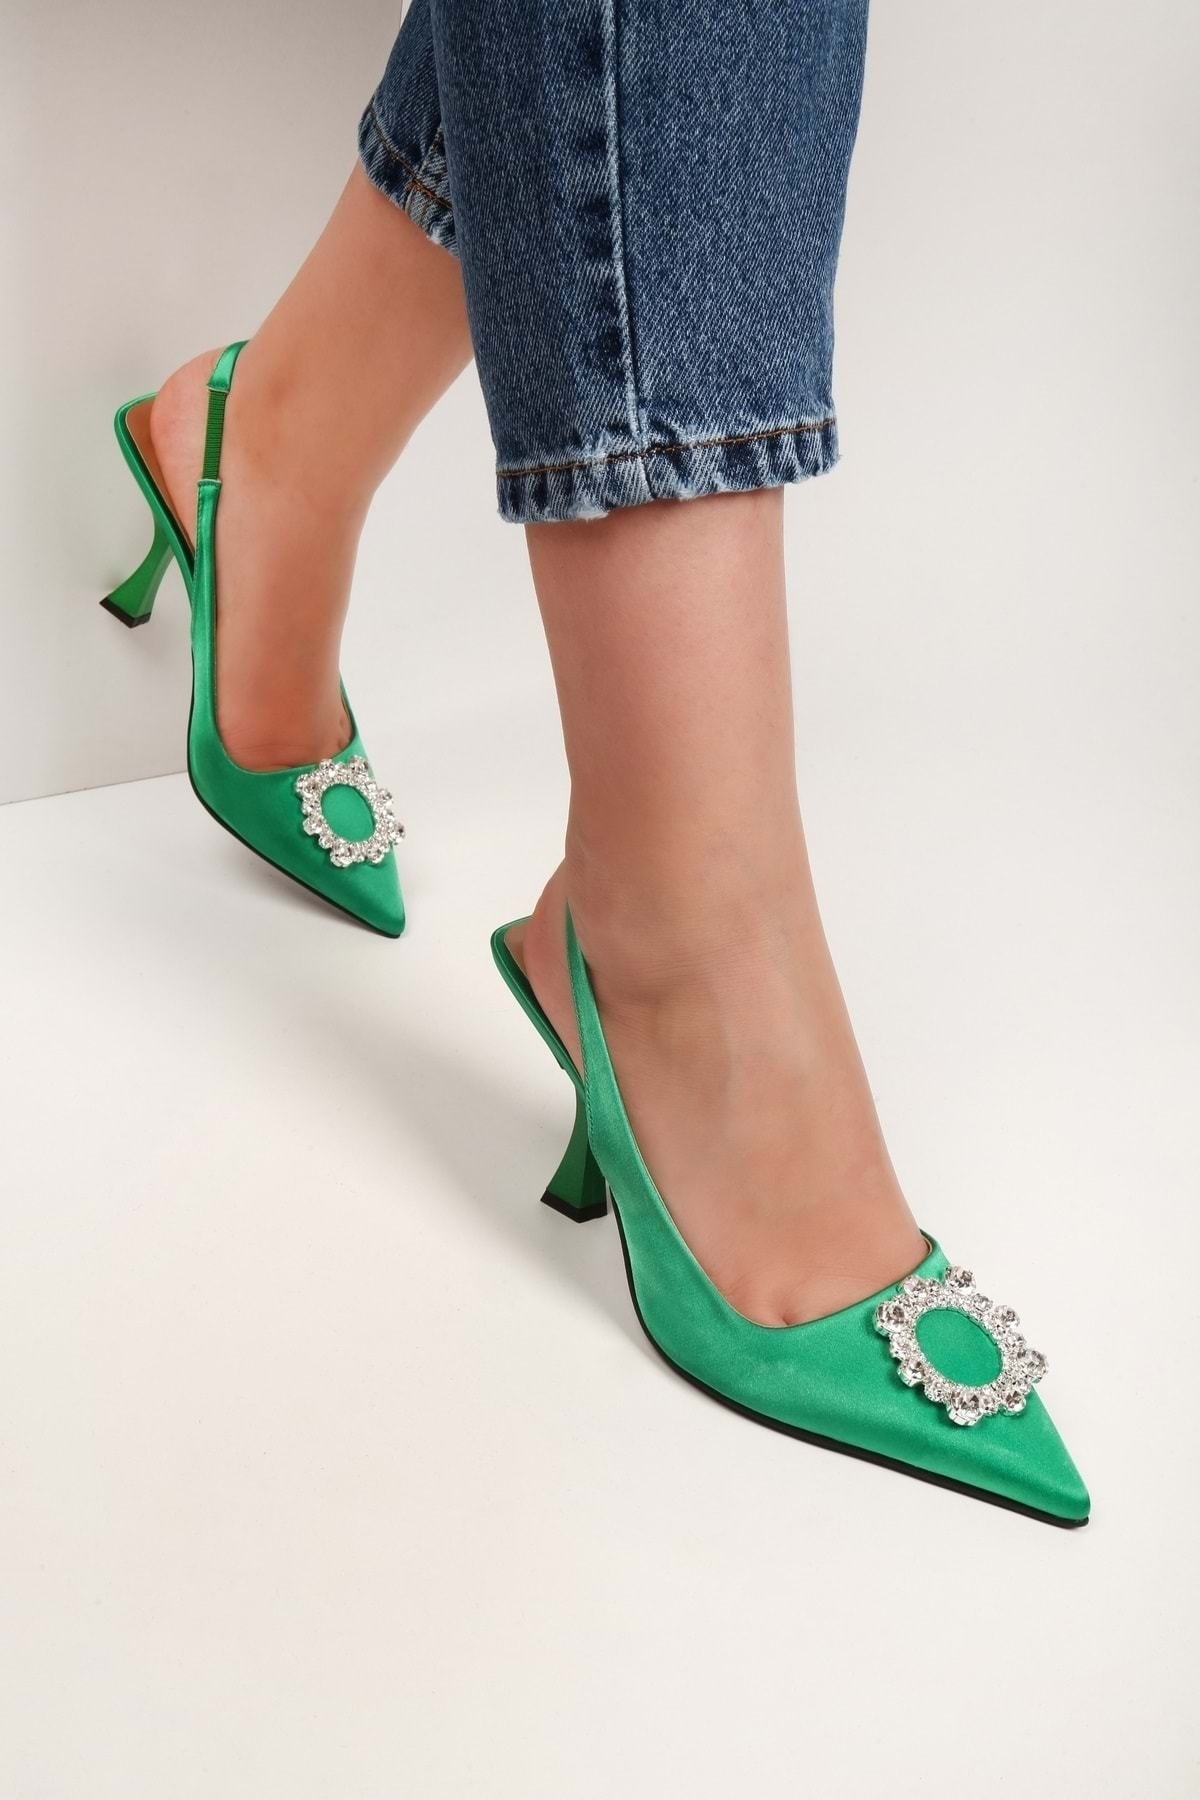 Levně Shoeberry Women's Sophia Green Satin Stone Heeled Shoes Stiletto